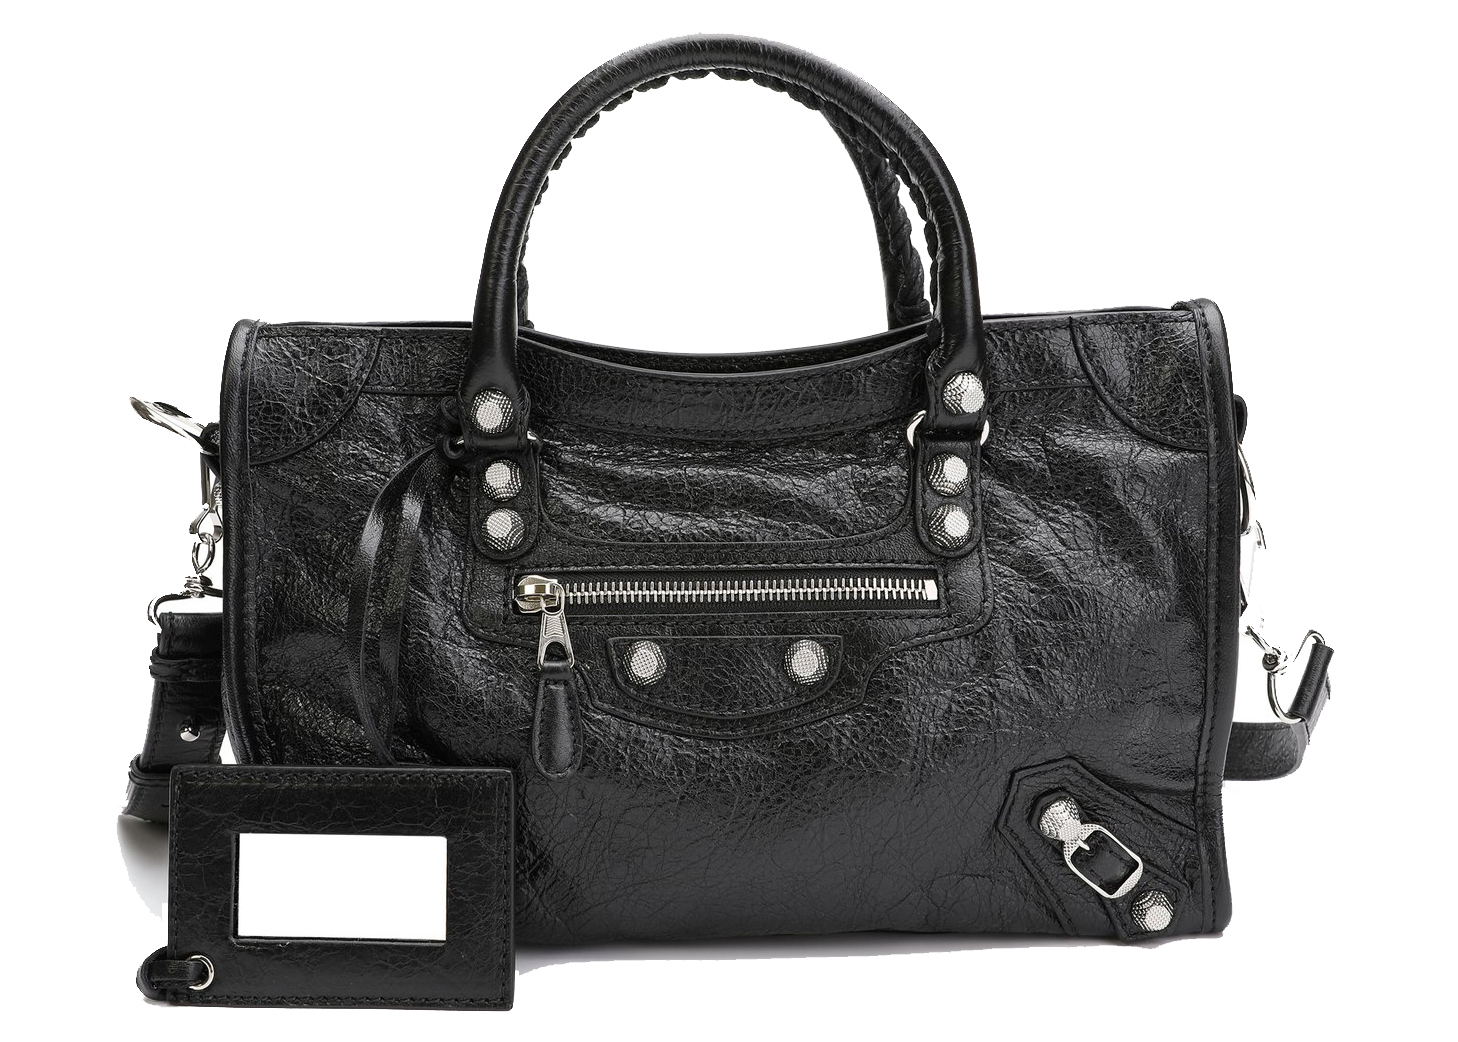 BCBGMAXAZRIA Black Leather Signature Hobo Bag purse silver hardware -  Women's handbags